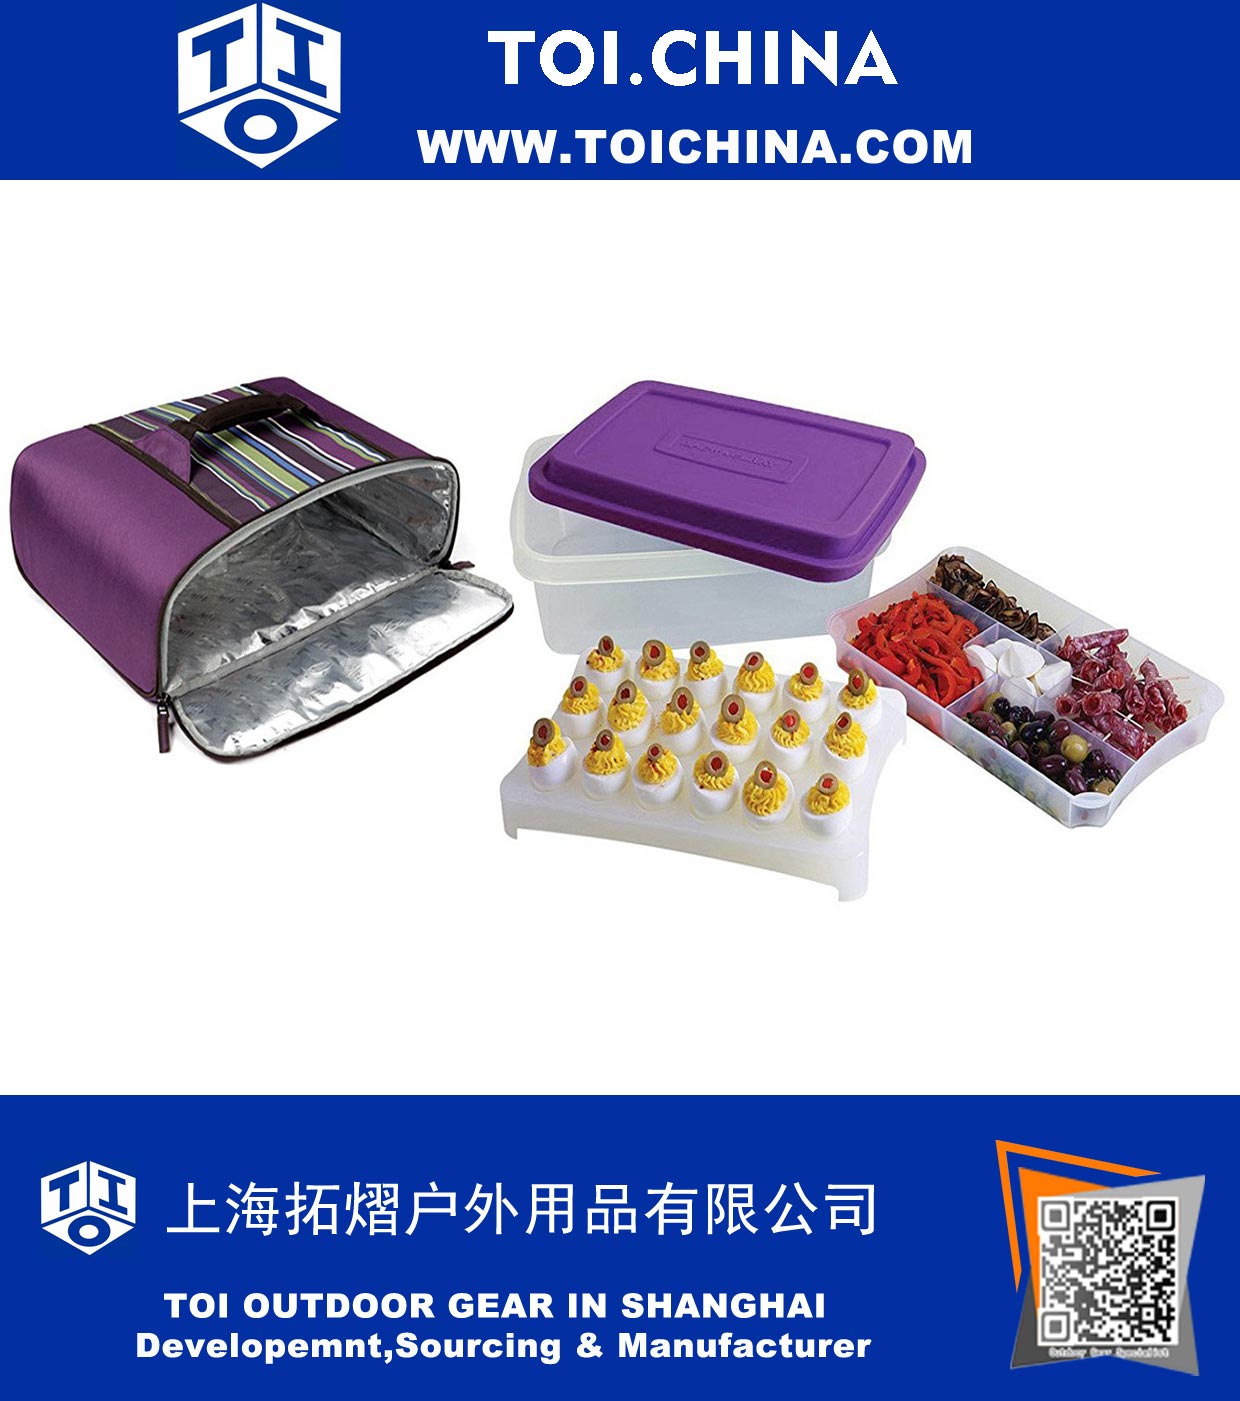 Caja de fiesta Foodtastic con portador termal universal, 6.8 litros, púrpura